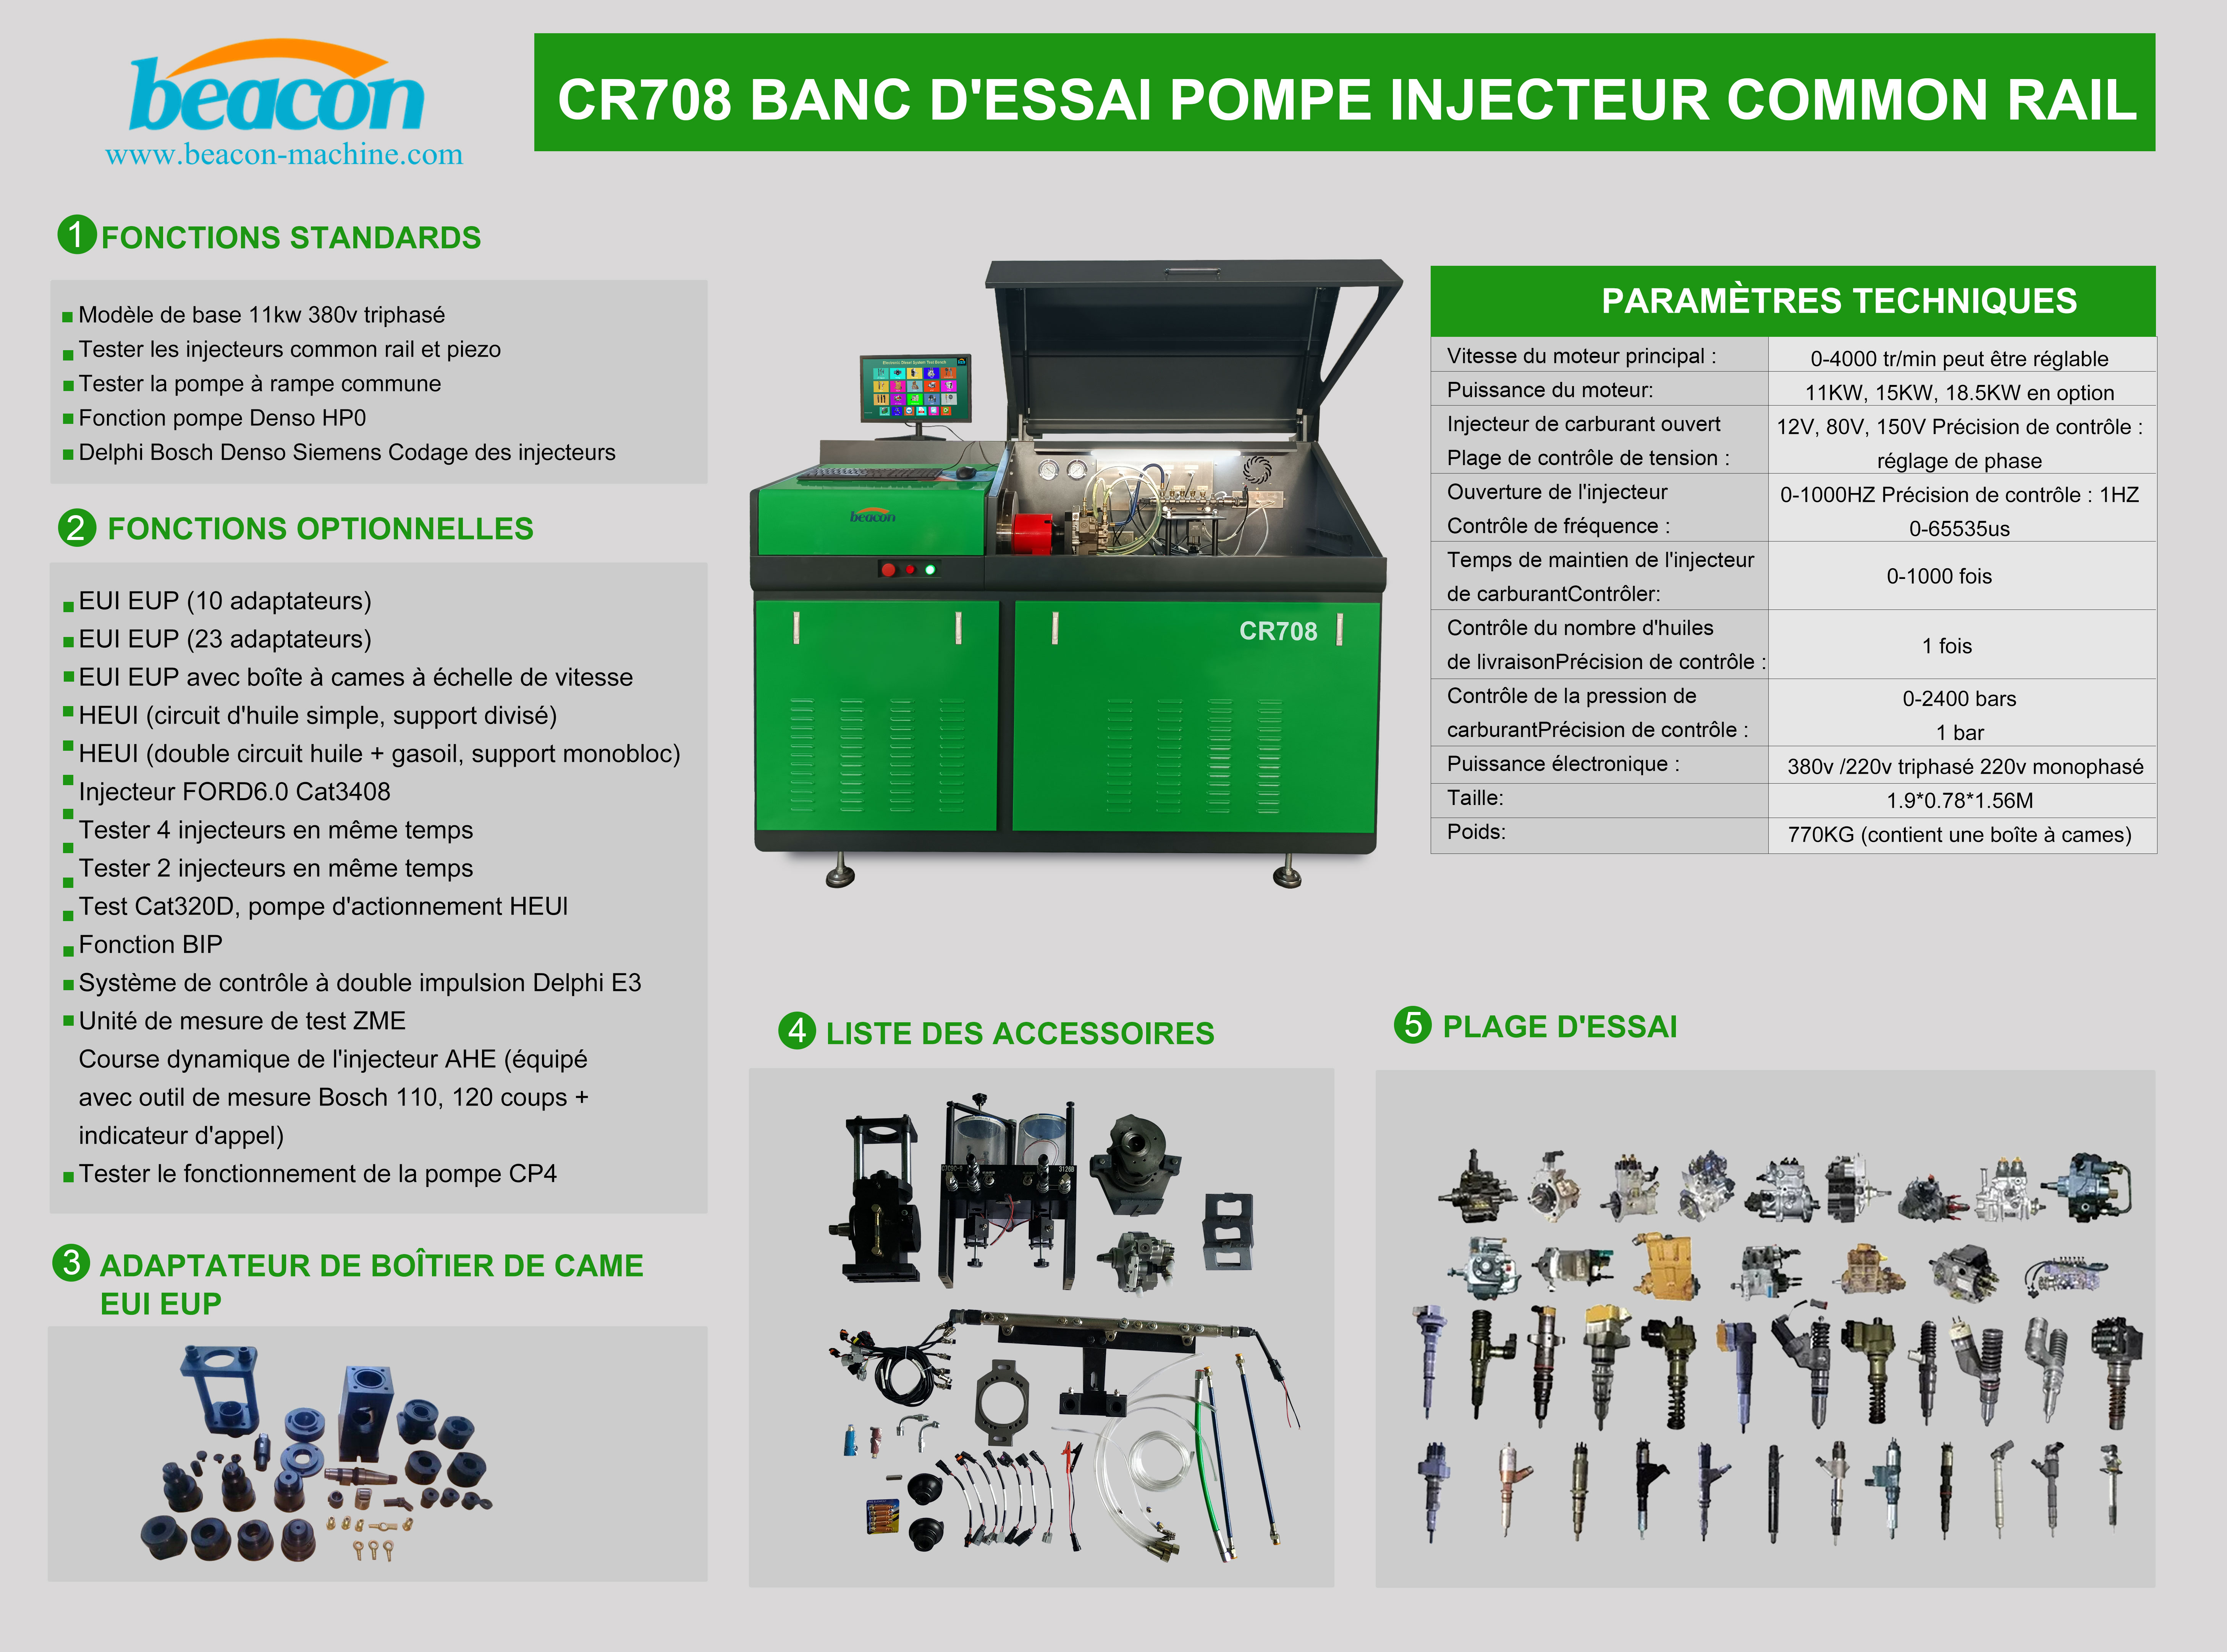 Common rail test bench CR708 common rail diesel injection pump test bench CR708L EUI EUP HEUI testing machine